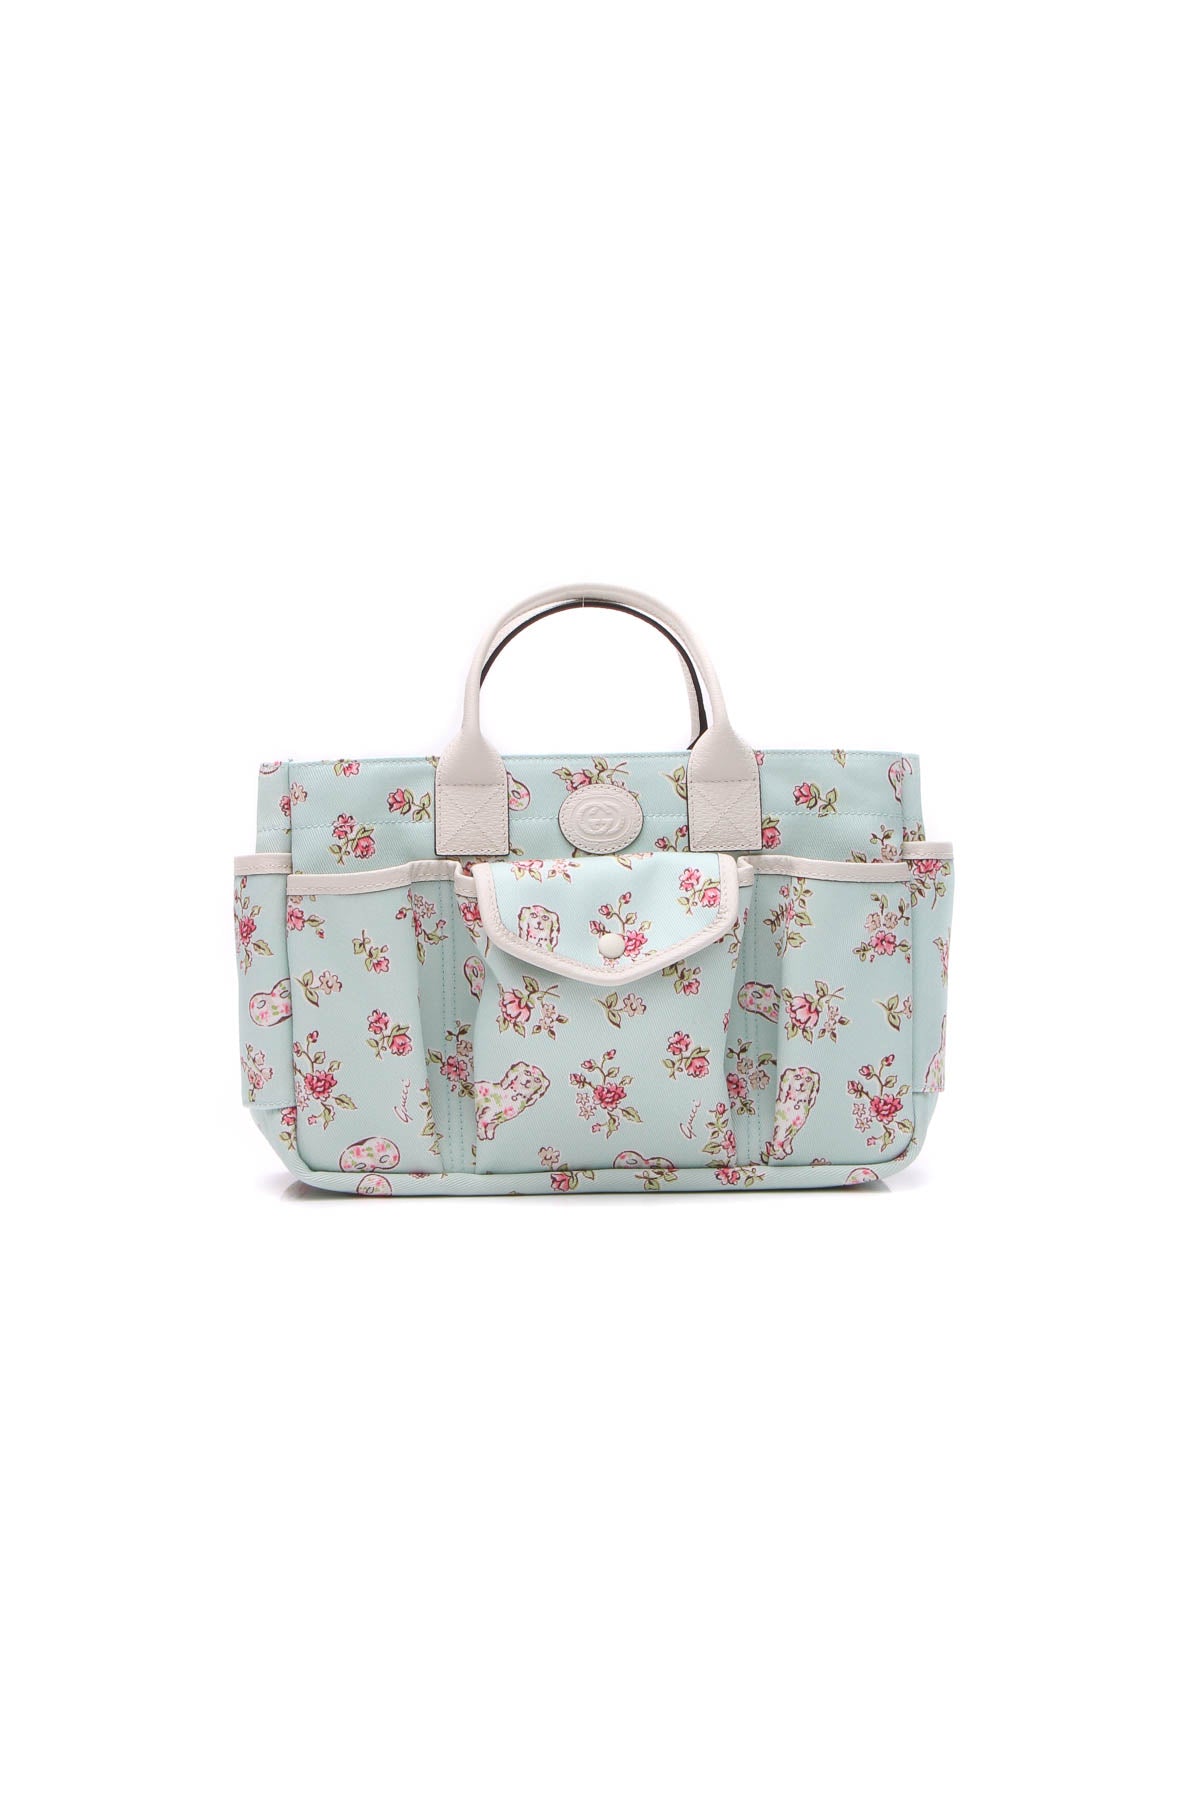 Gucci Children's Floral Print Tote Bag